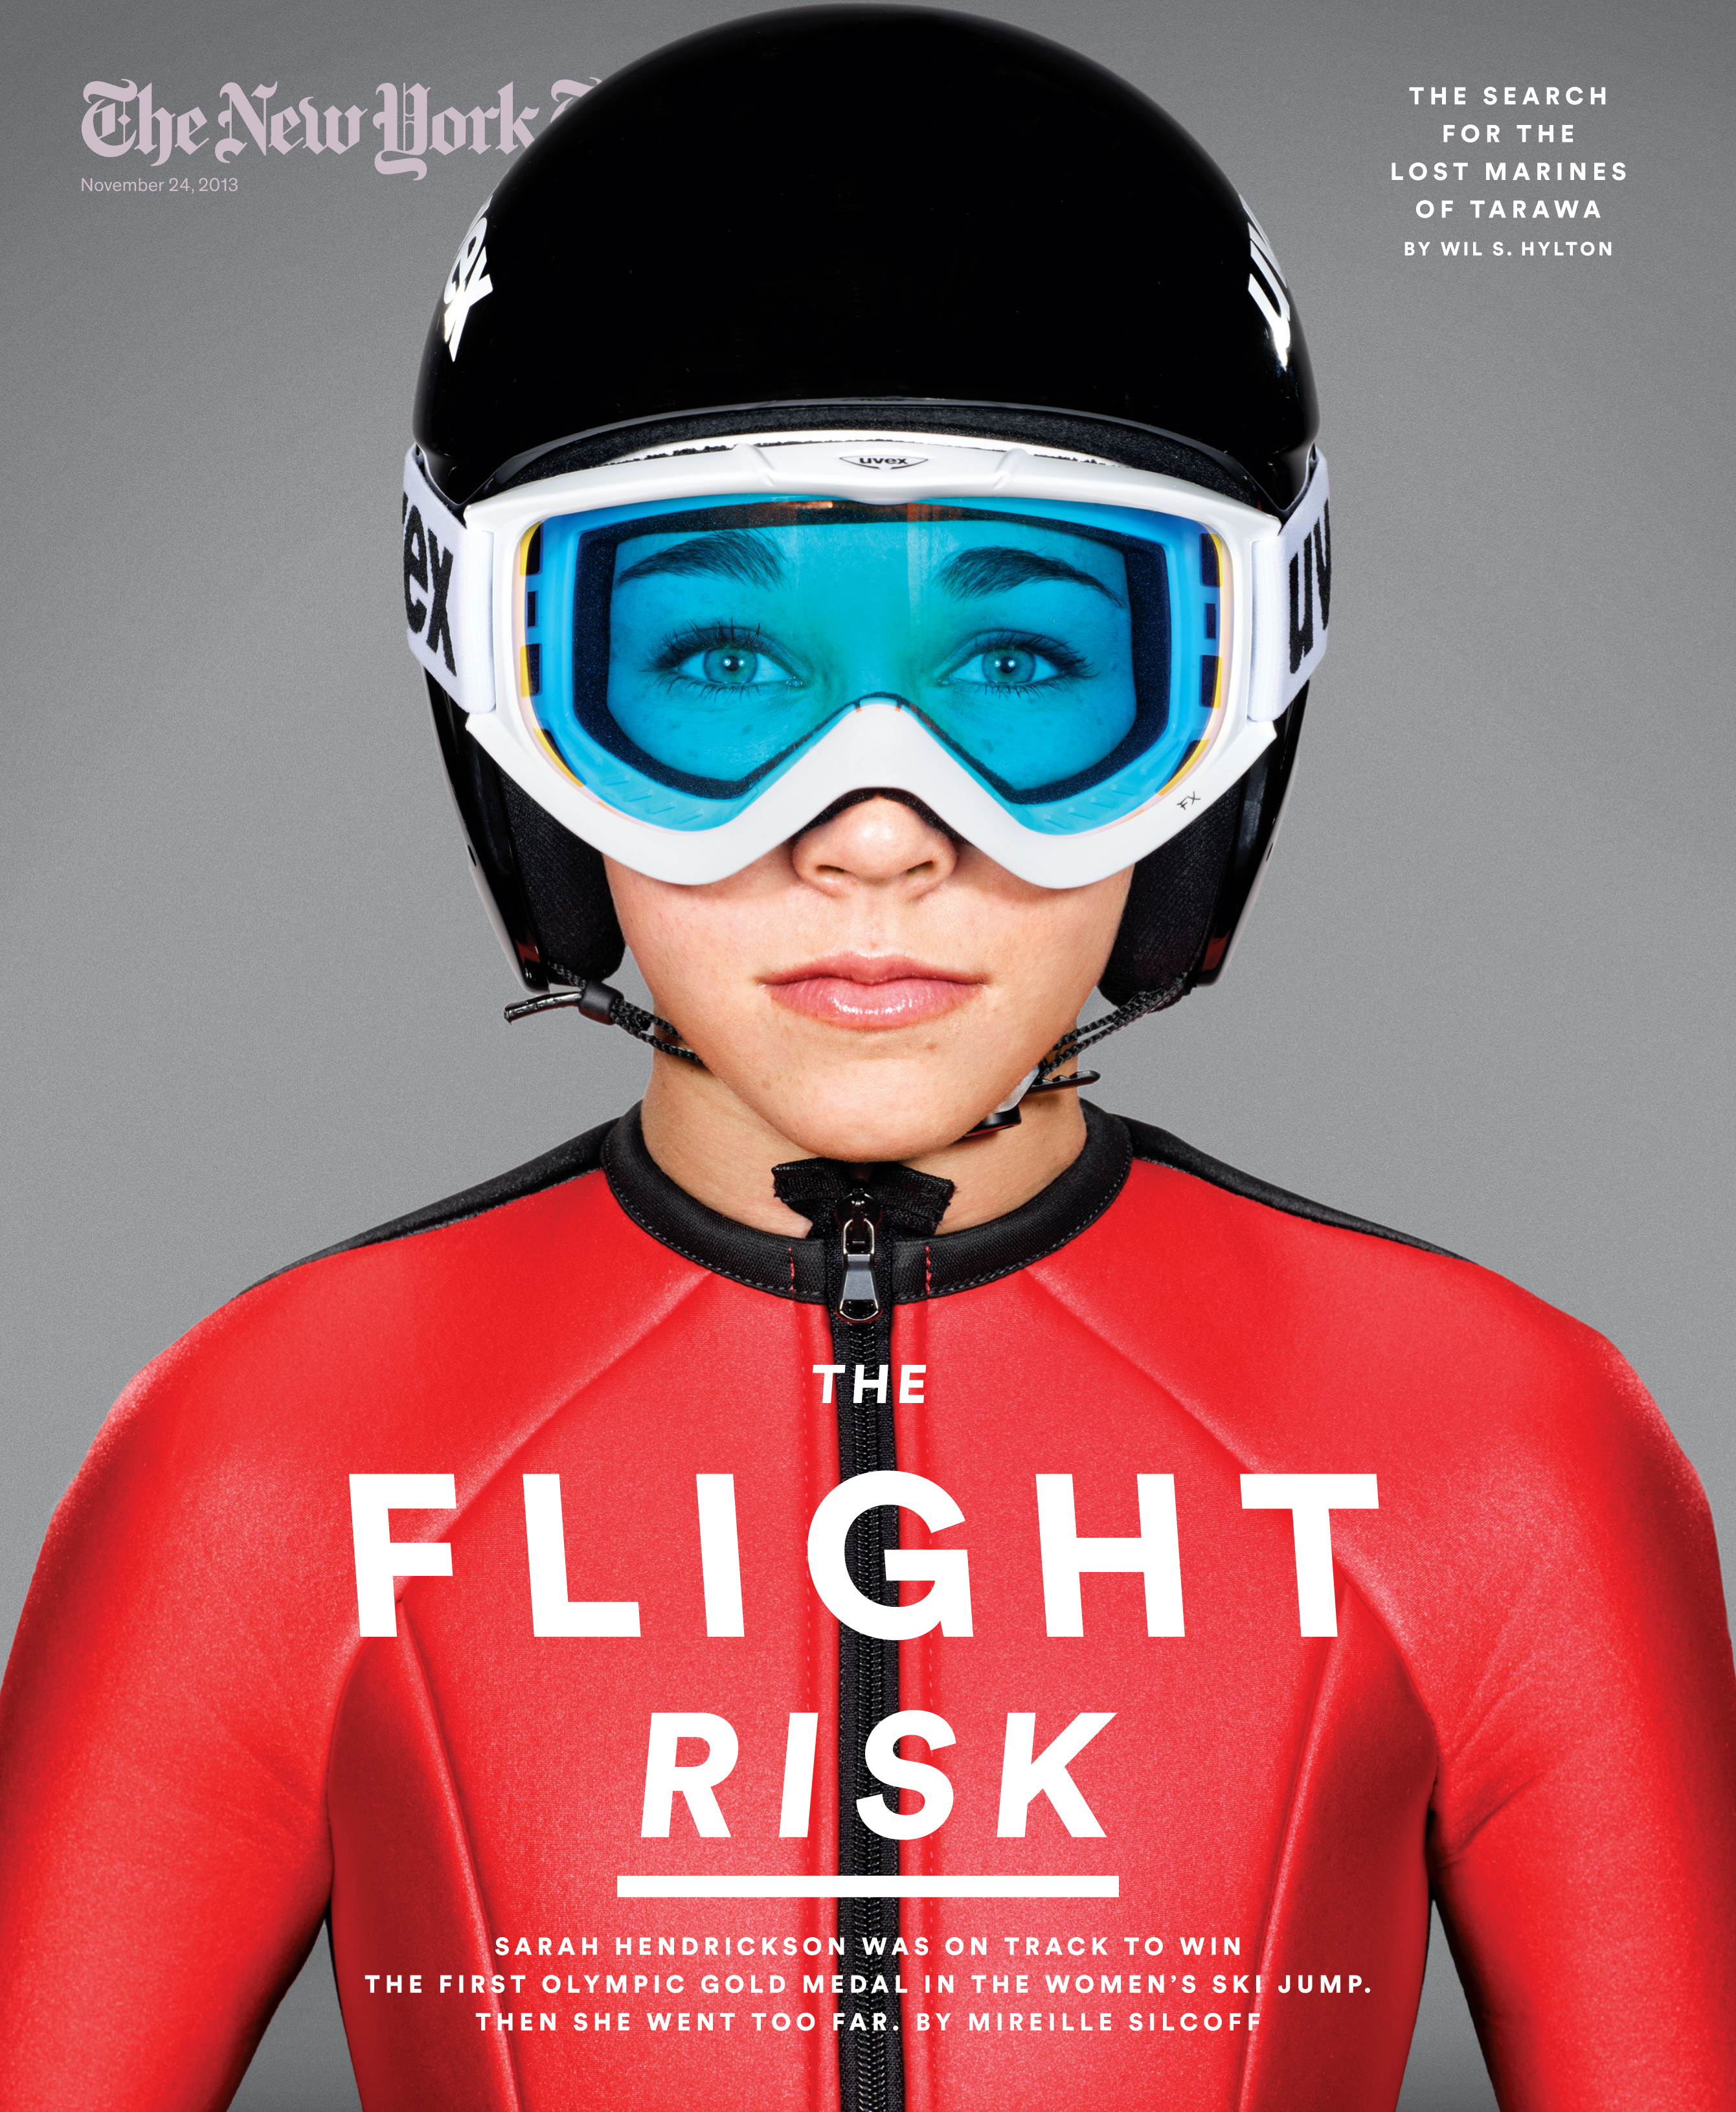 The New York Times Magazine-November 24, "The Flight Risk"